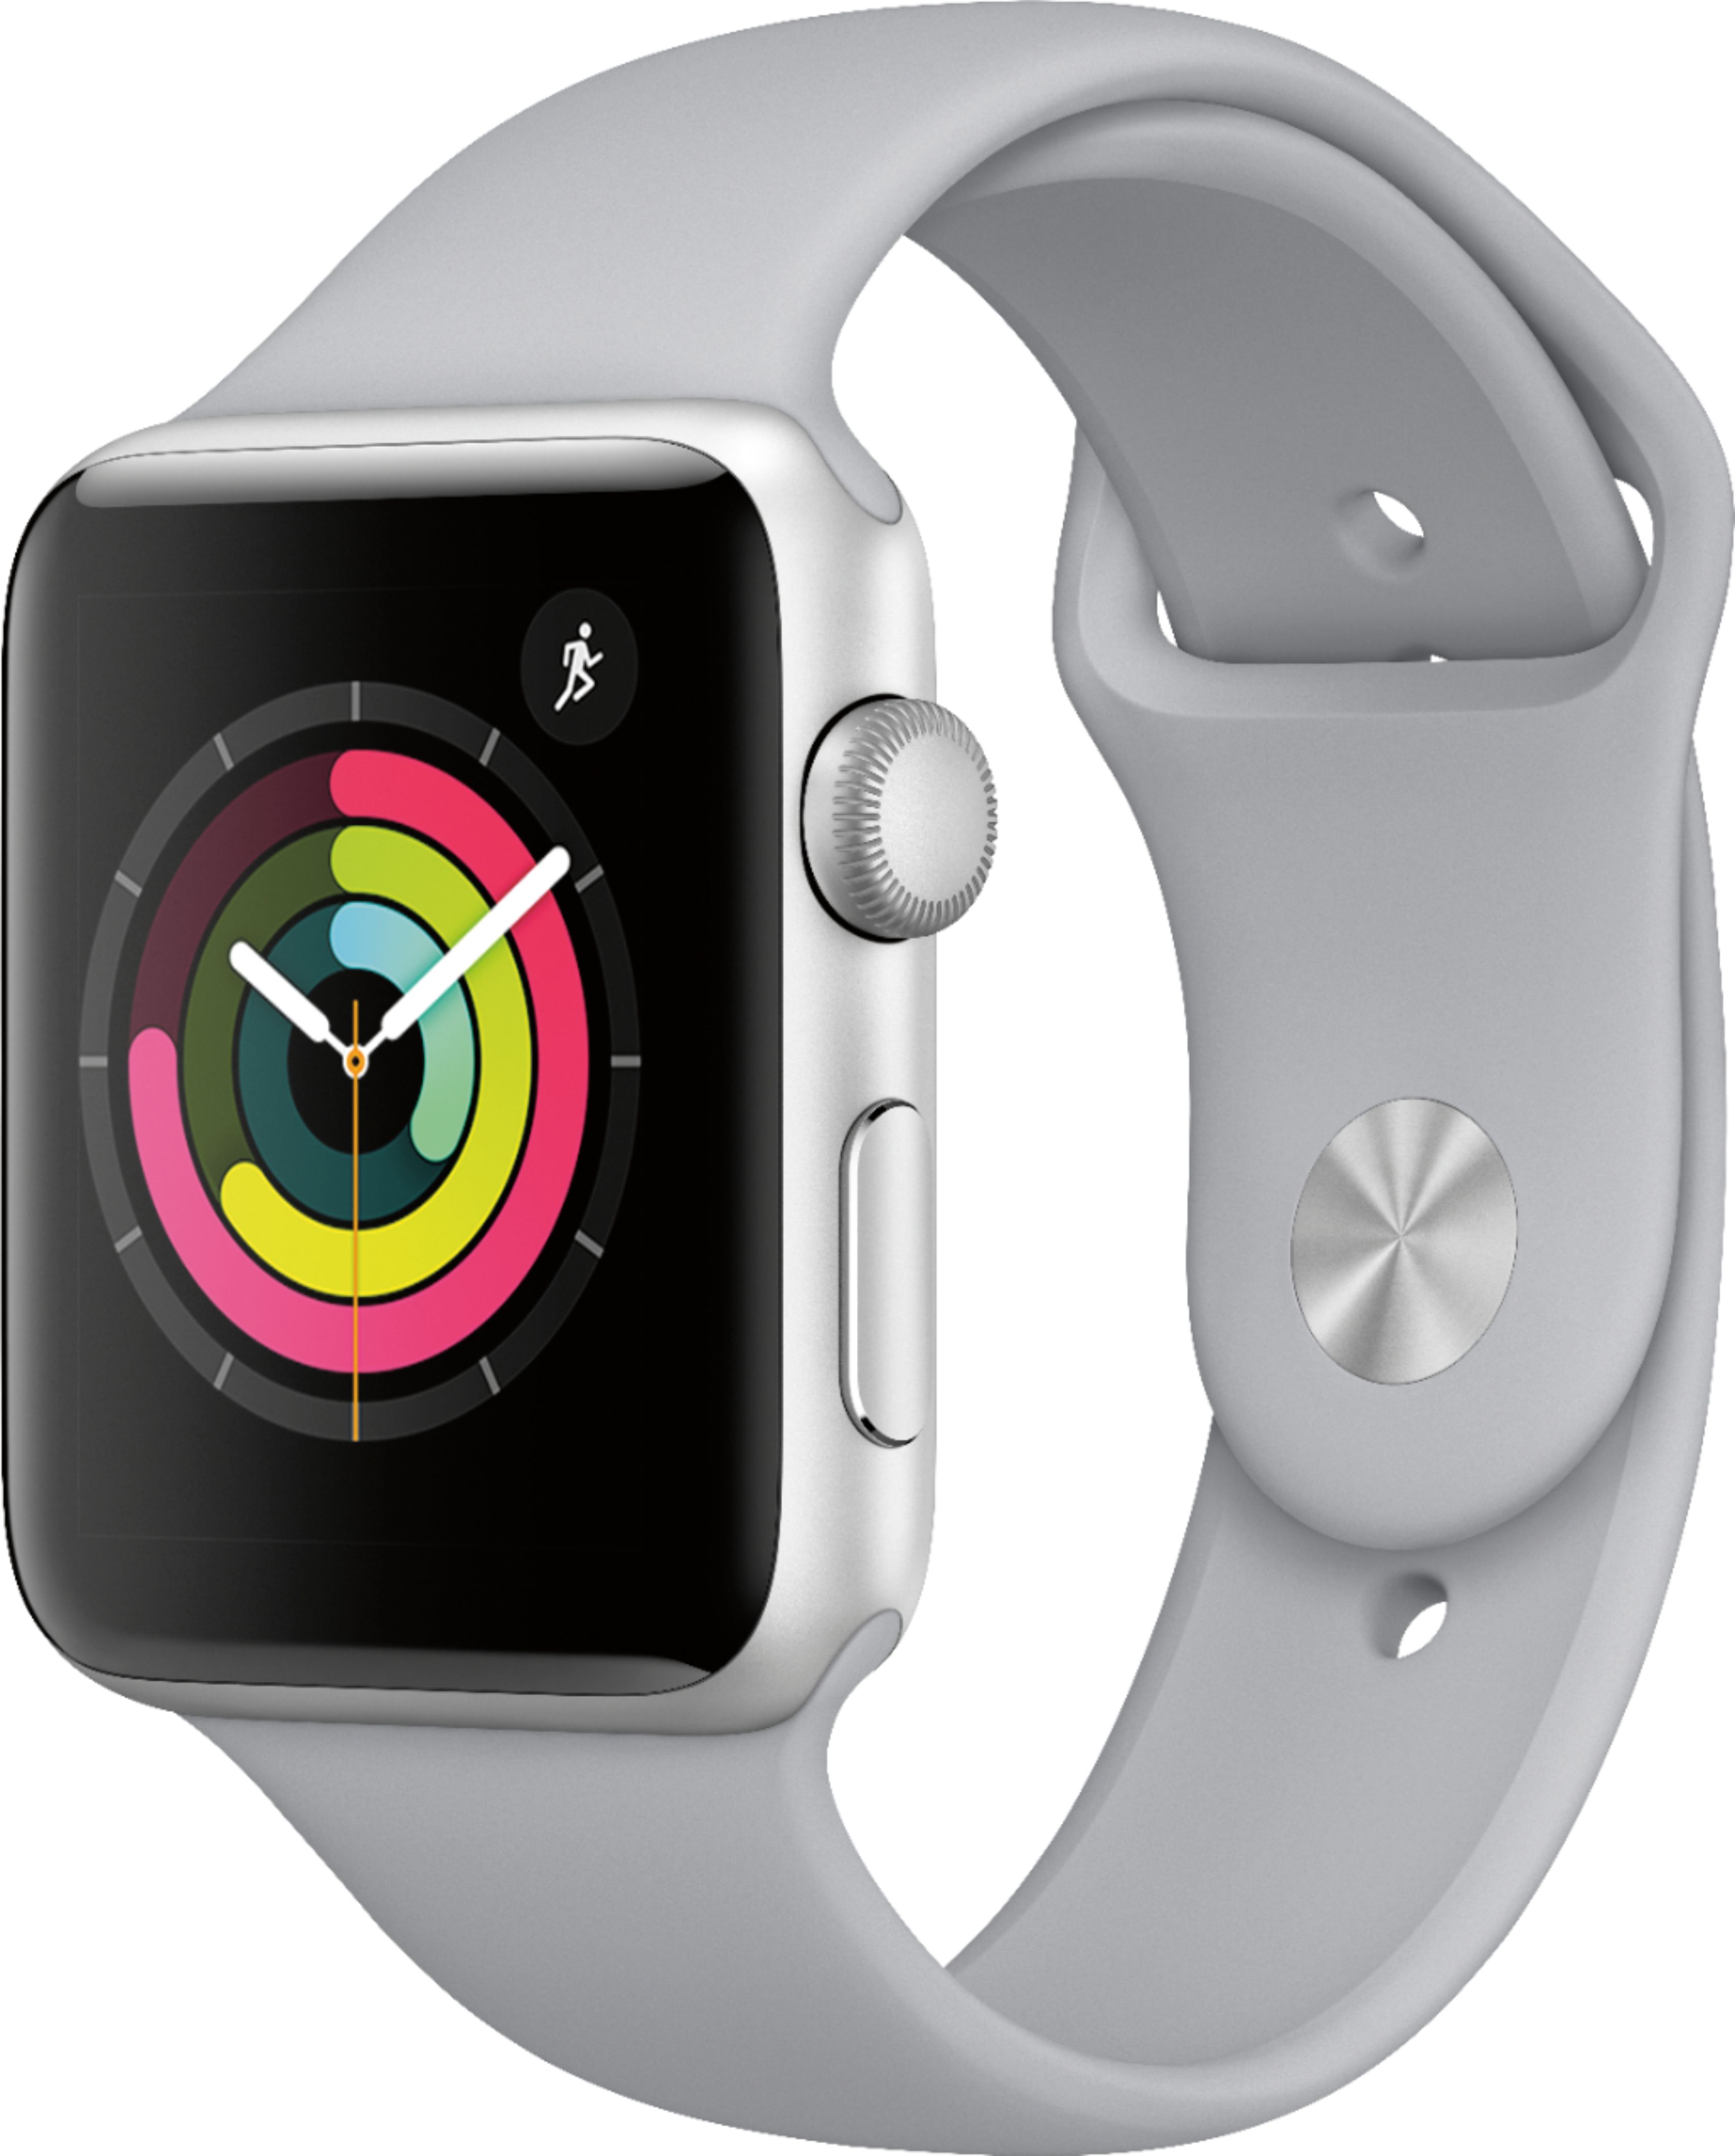 Customer Reviews: Apple Watch Series 3 (GPS), 42mm Silver Aluminum 